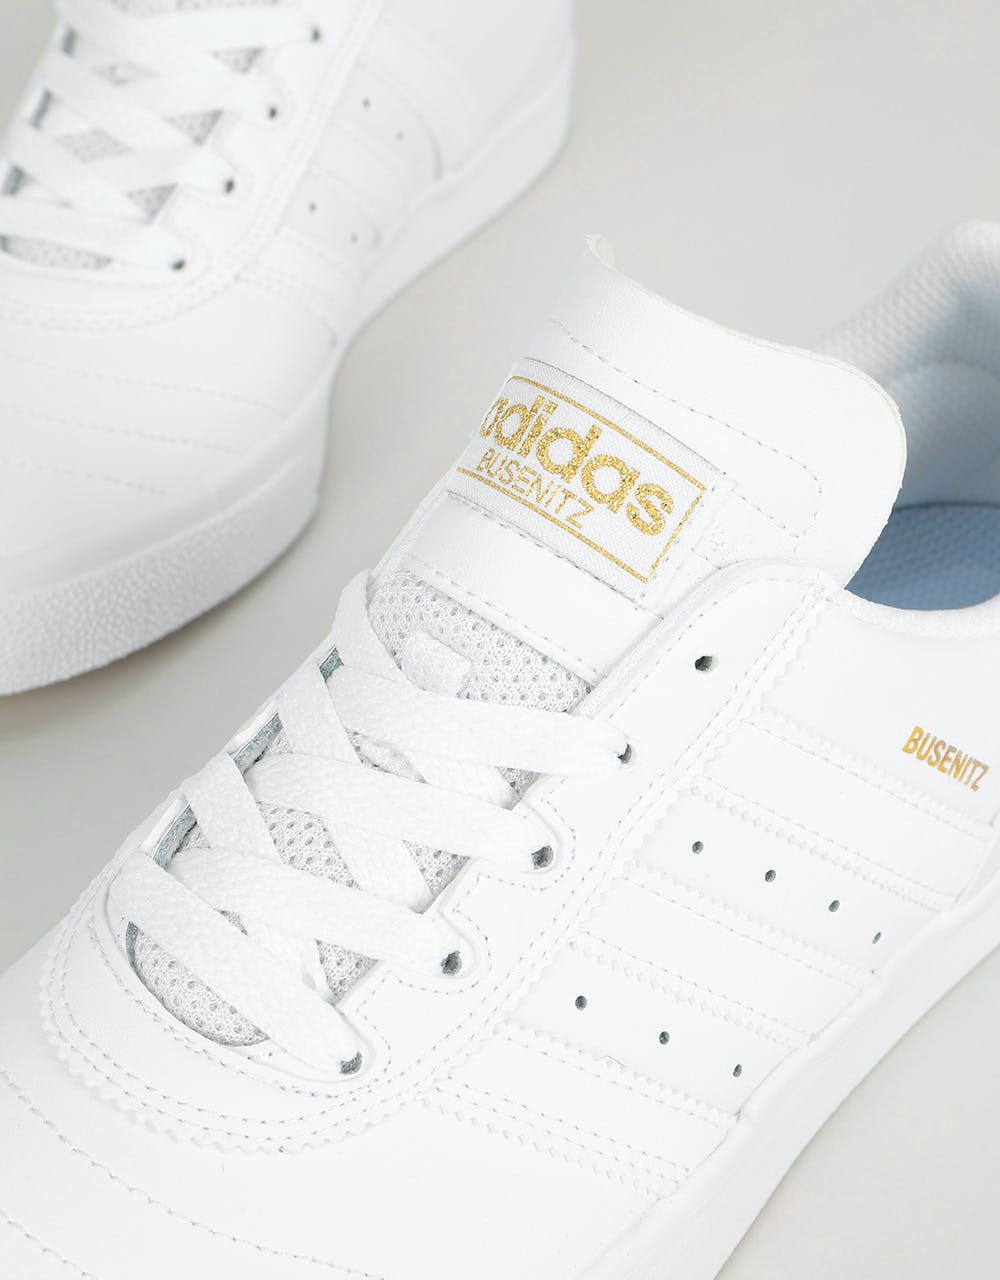 Adidas Busenitz Vulc RX Skate Shoes - White/White/Gold Metallic